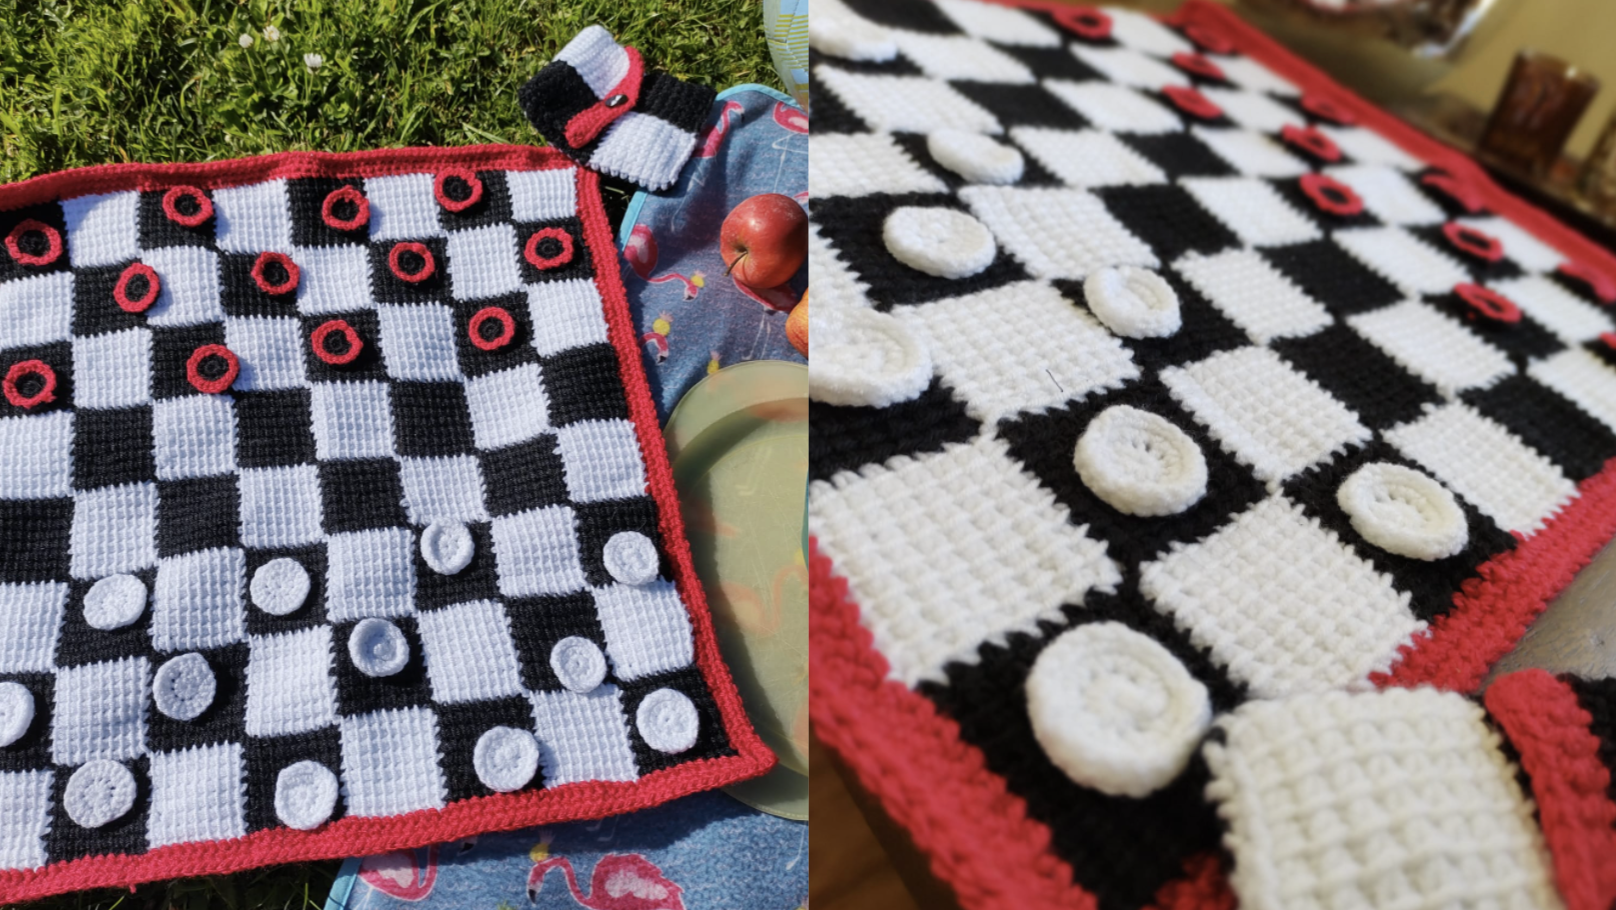 Lisa Lamb’s Tunisian Crochet Blanket/Checkers Board